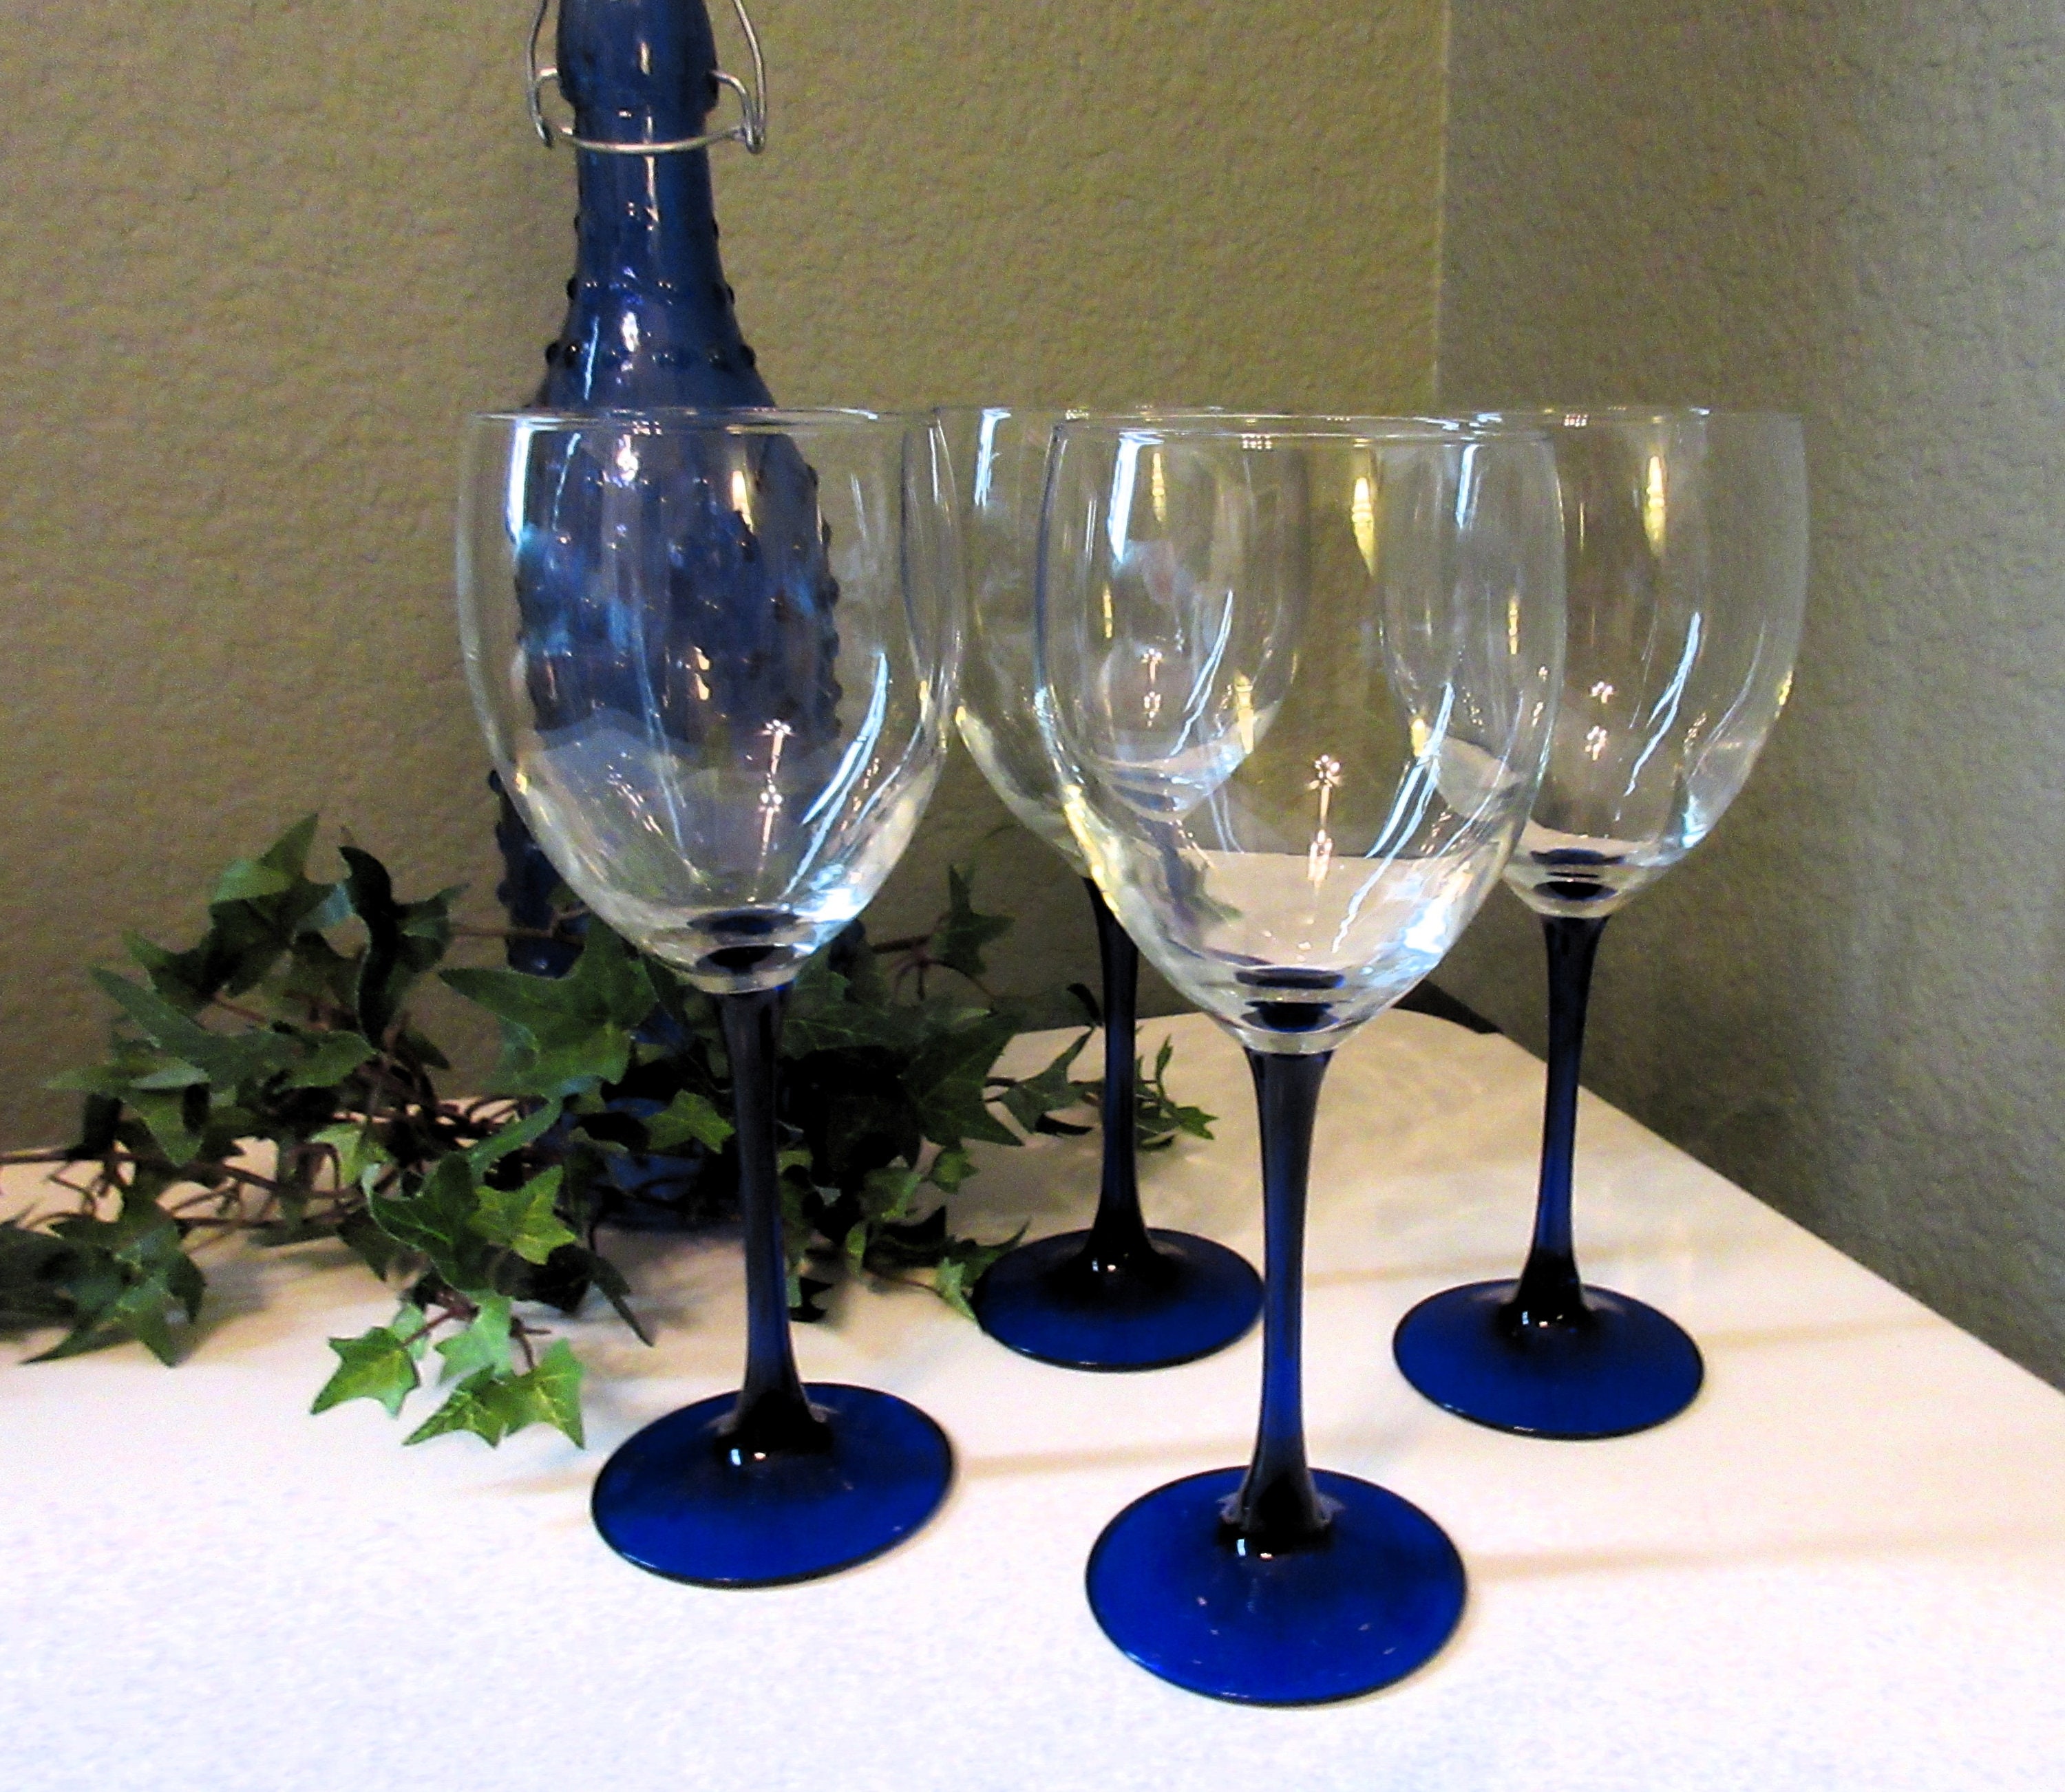 Elixir Glassware Stemless Martini Glasses Set of 4 - Hand Blown Crystal Martini Glasses - Elegant Cocktail Glasses for Bar - 9oz, Clear, Size: One